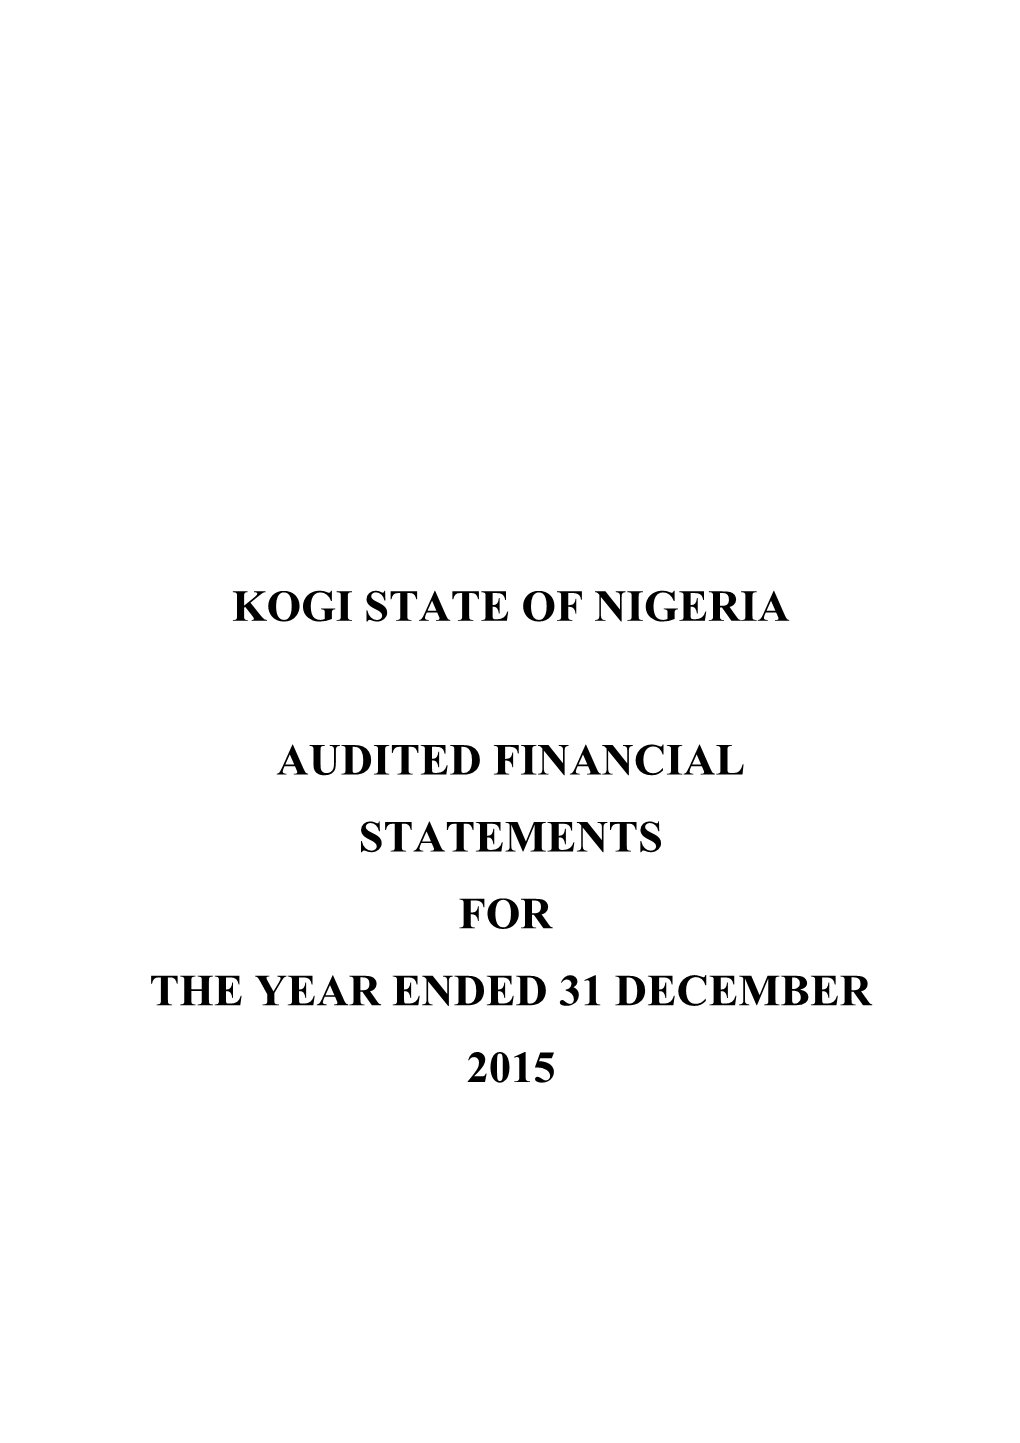 KOGI State of Nigeria